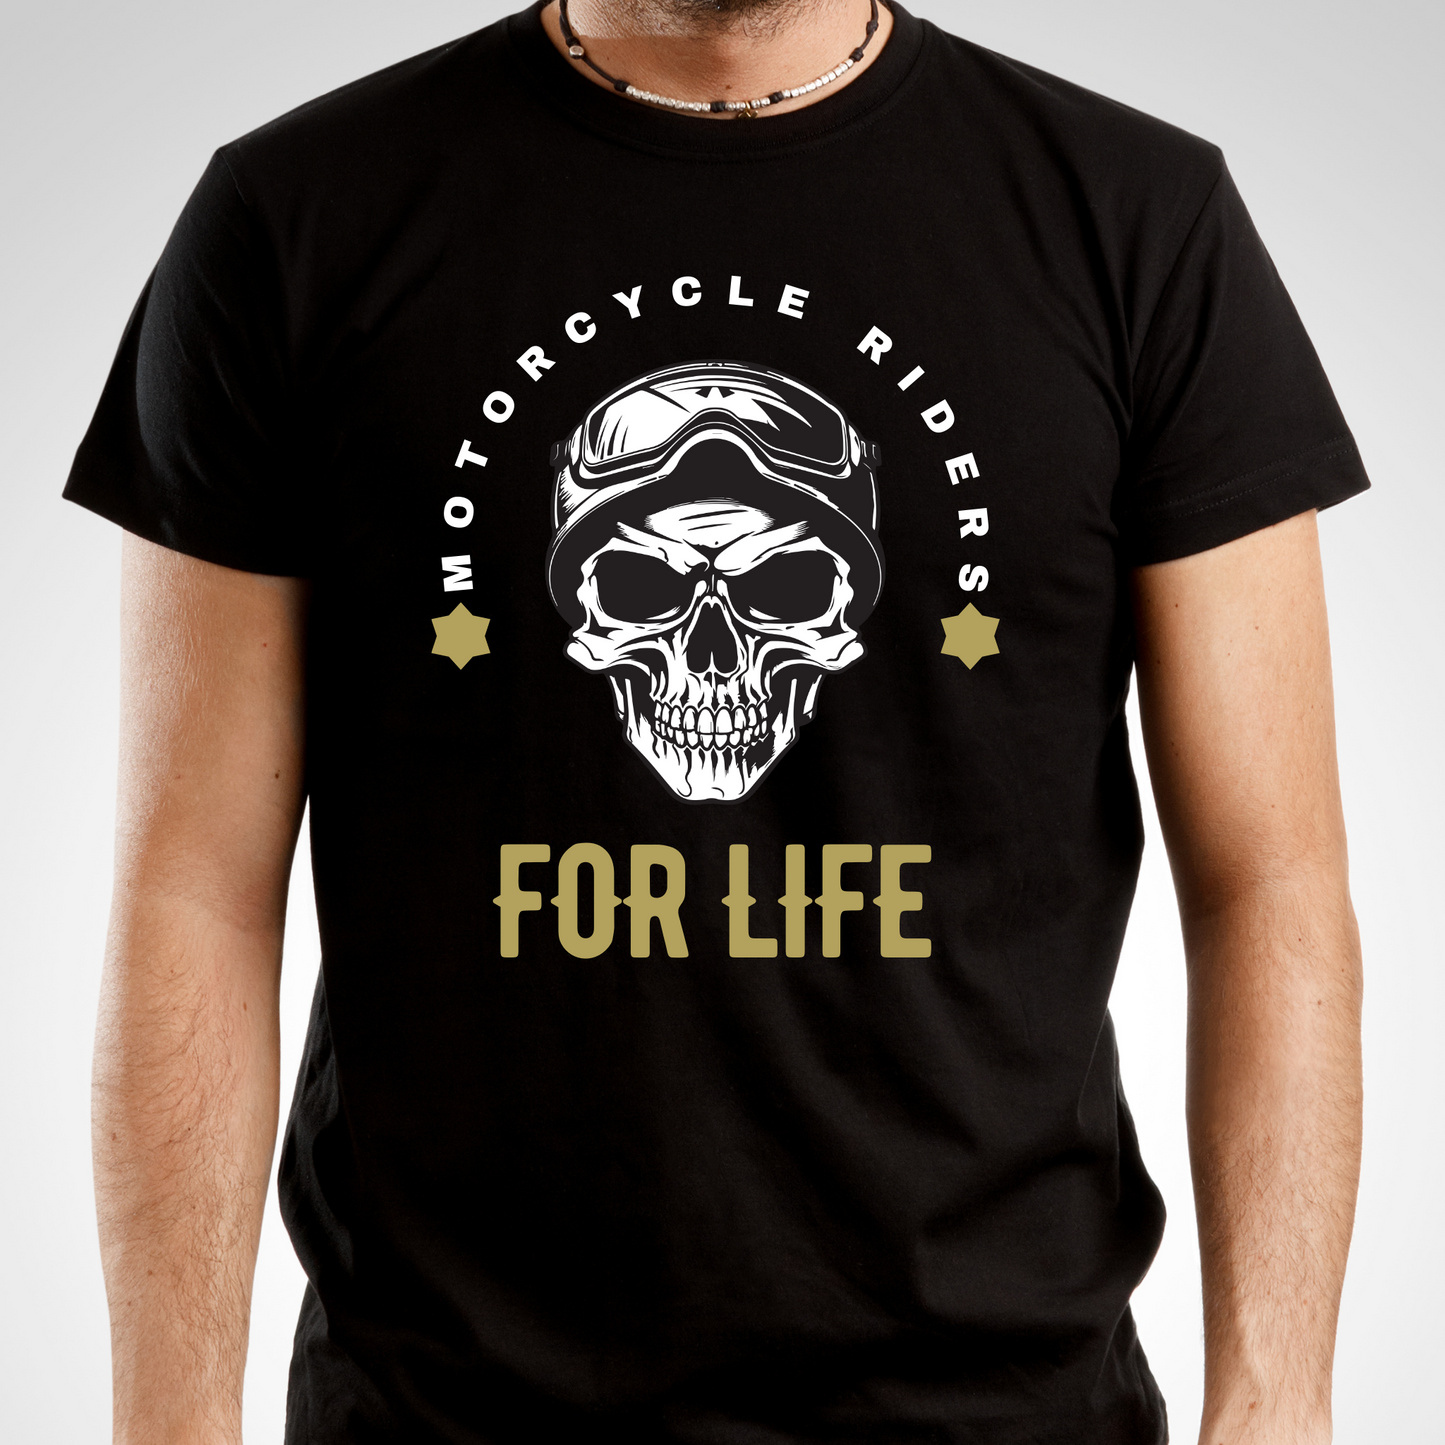 Motorcycle riders for life - Men's biker tee shirt - Premium t-shirt from Lees Krazy Teez - Just $19.95! Shop now at Lees Krazy Teez